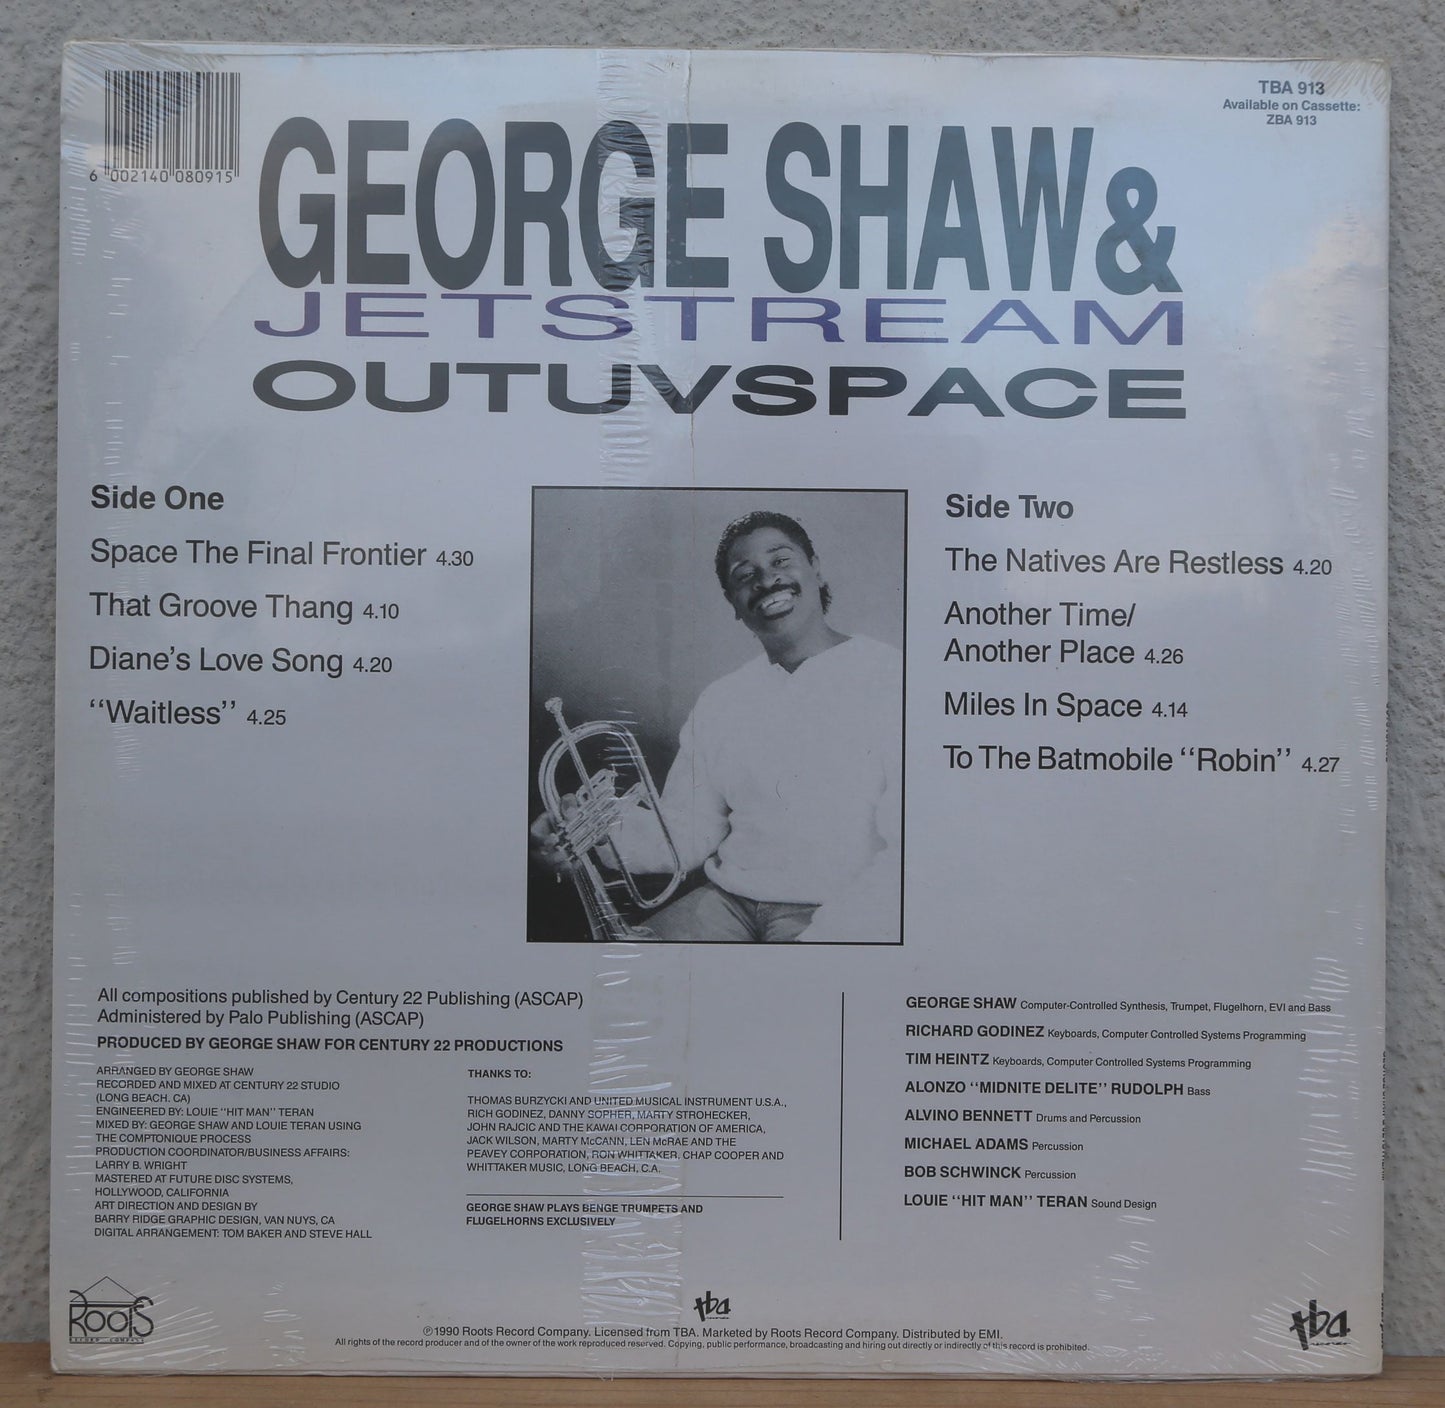 George Shaw & Jetstream - Outuvspace